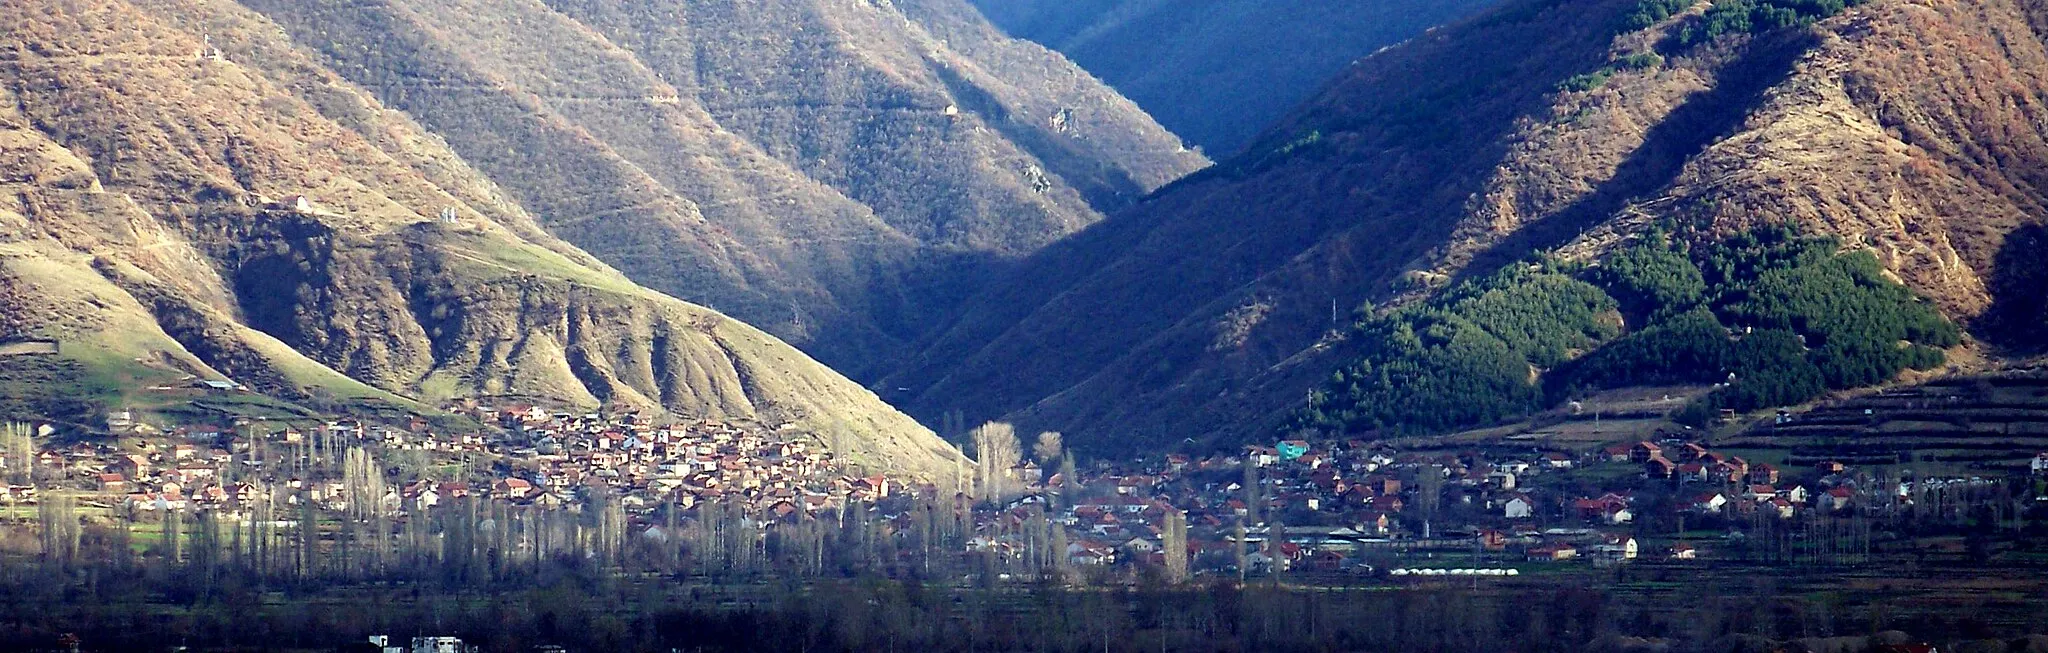 Image of Zrnovci